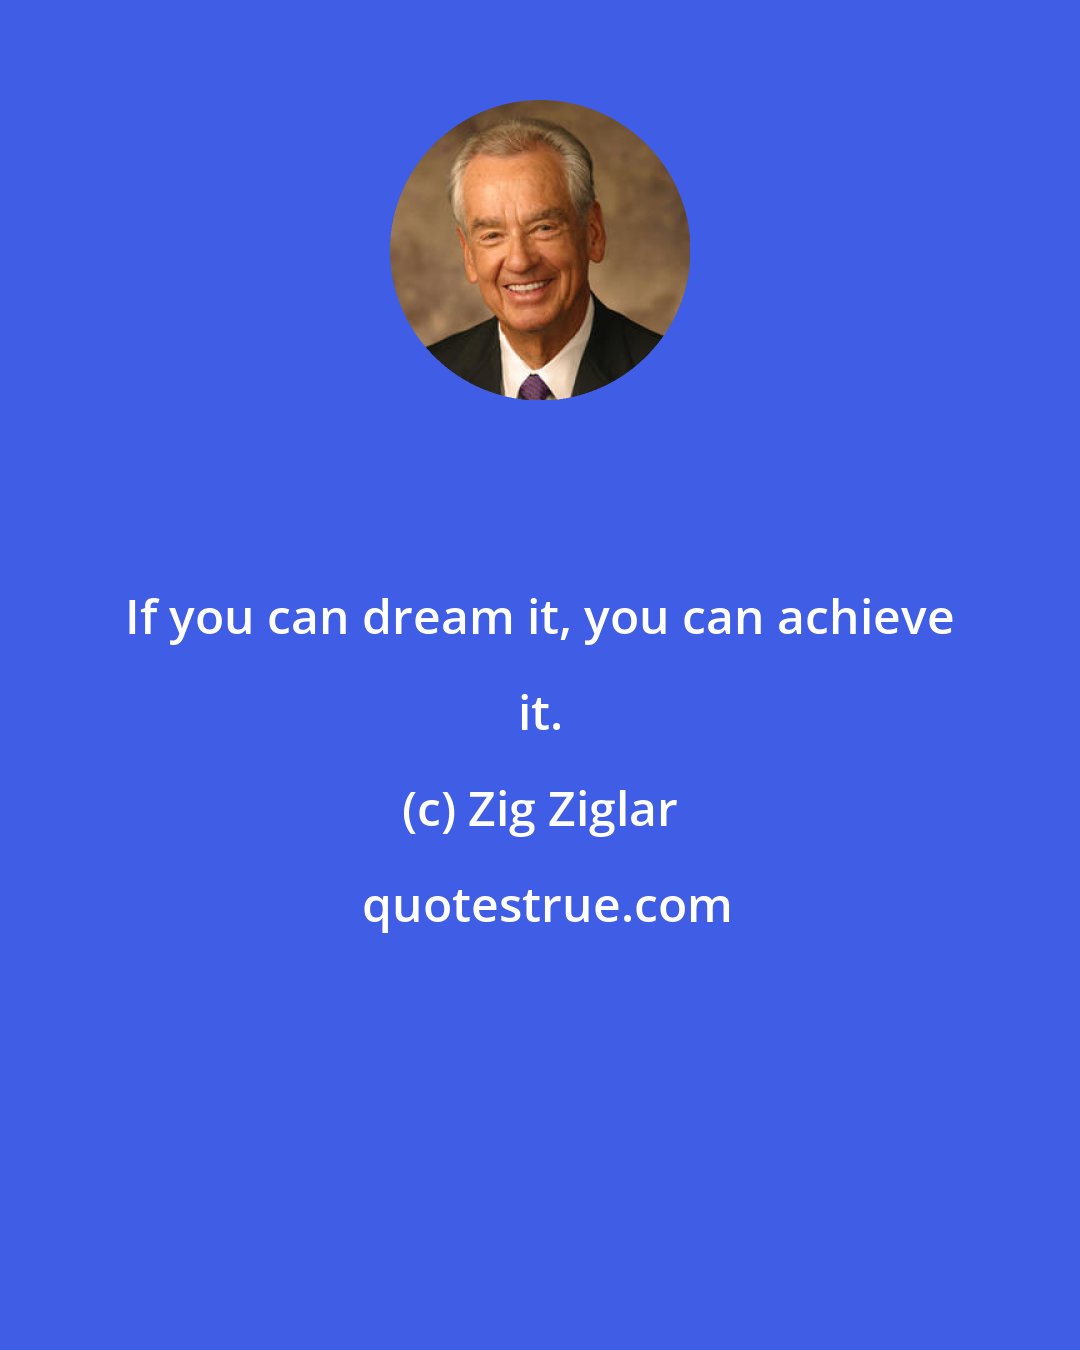 Zig Ziglar: If you can dream it, you can achieve it.